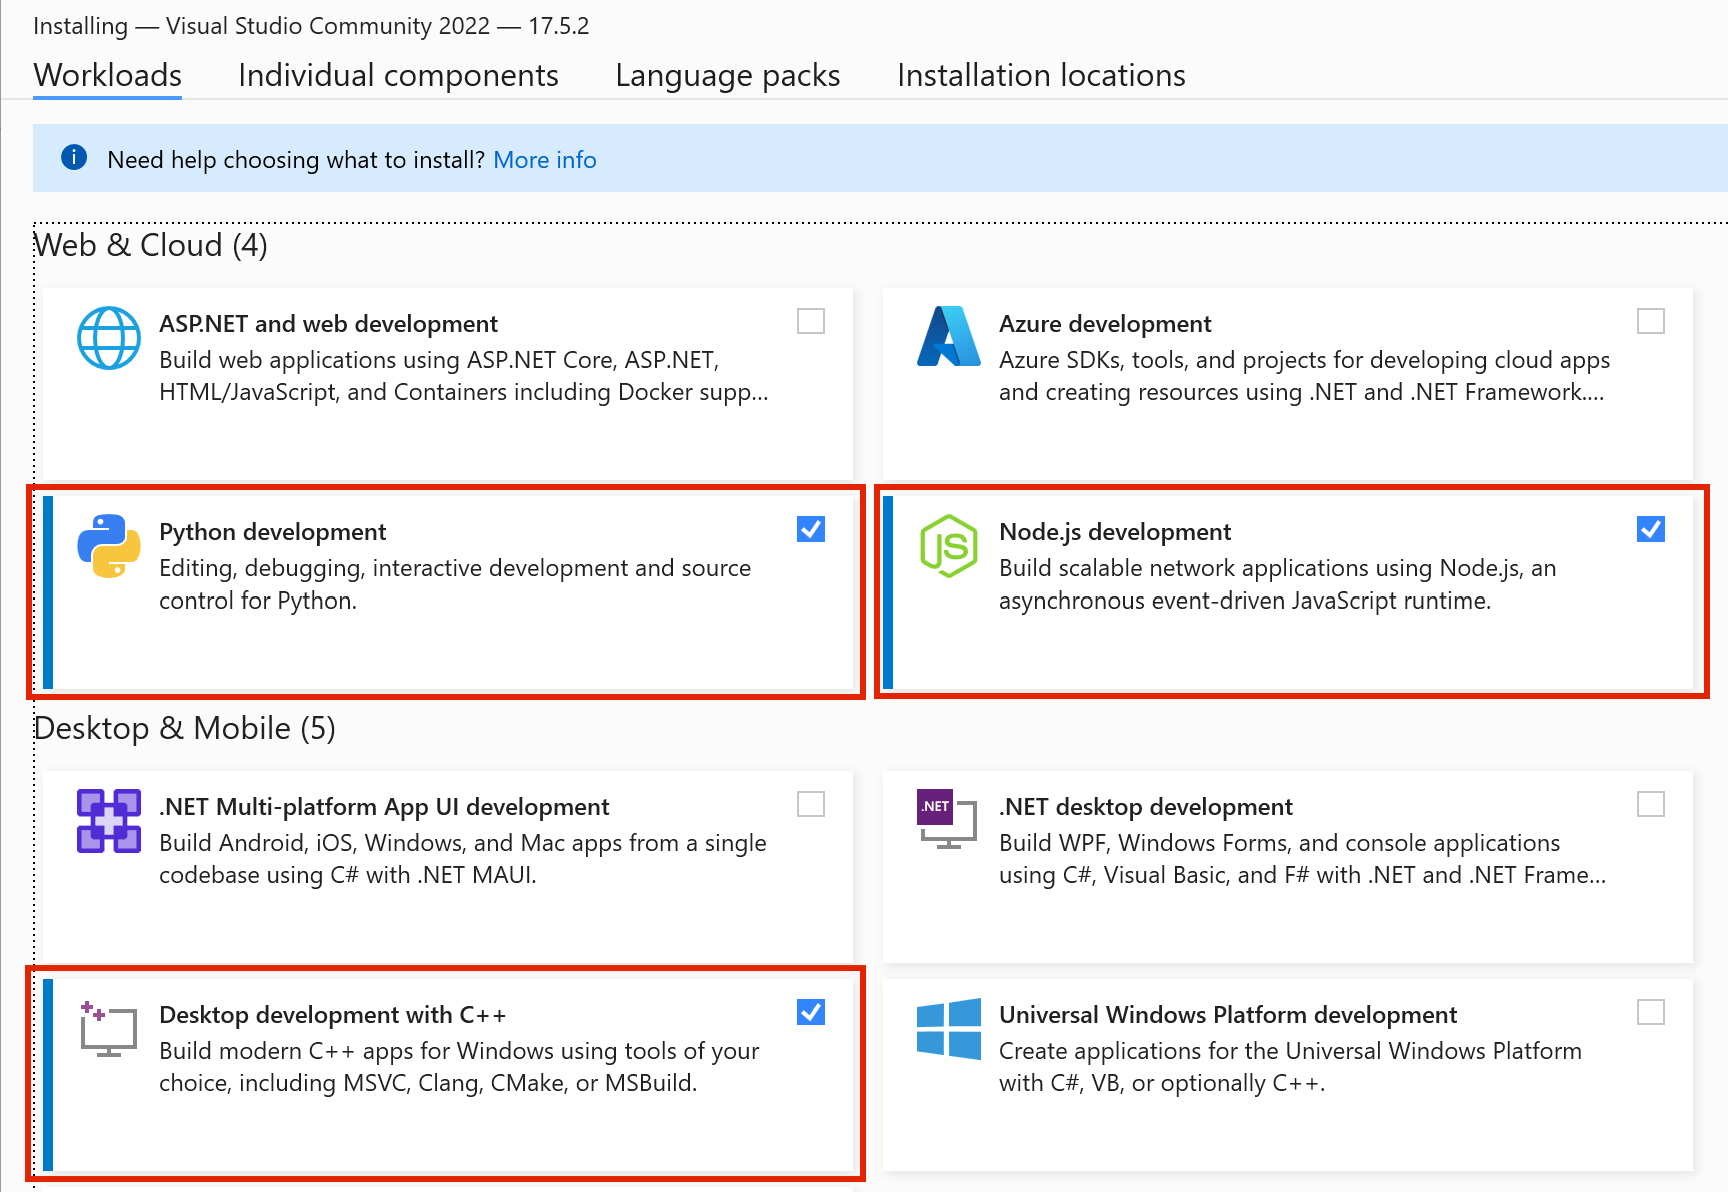 A screenshot showing to select the following options: "Python development, Node.js development, and Desktop development with C++"